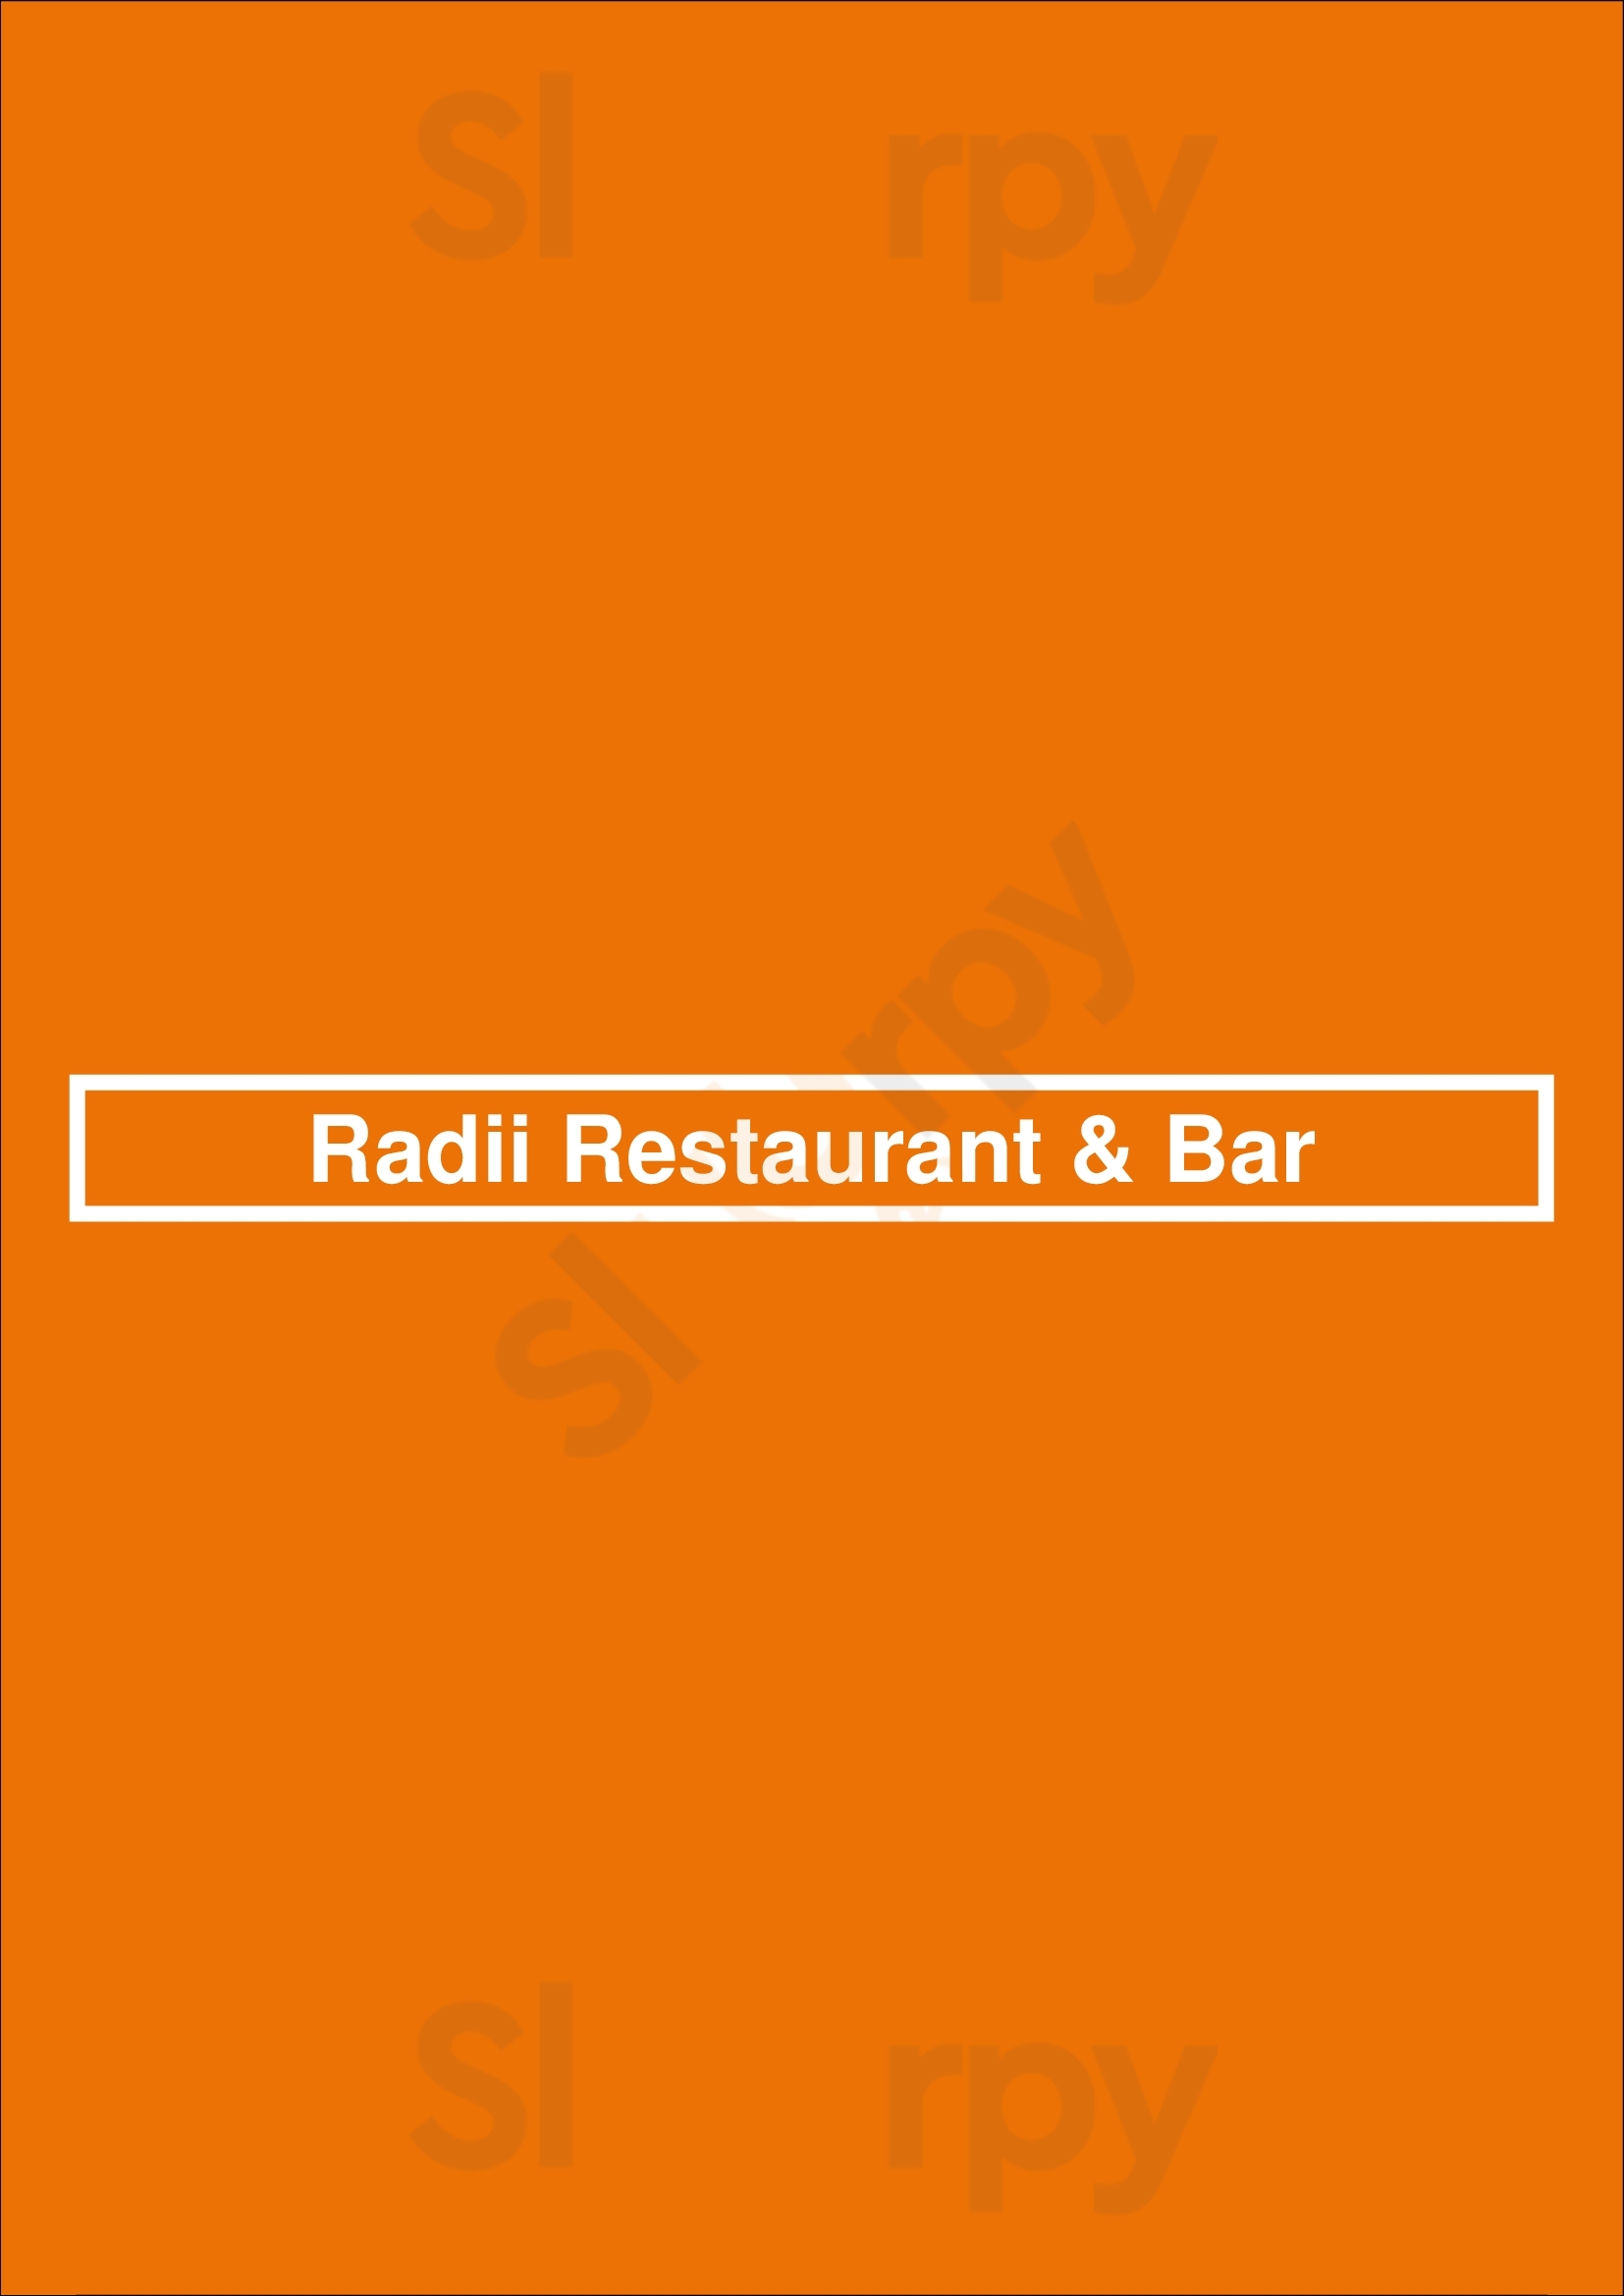 Radii Restaurant & Bar Melbourne Menu - 1